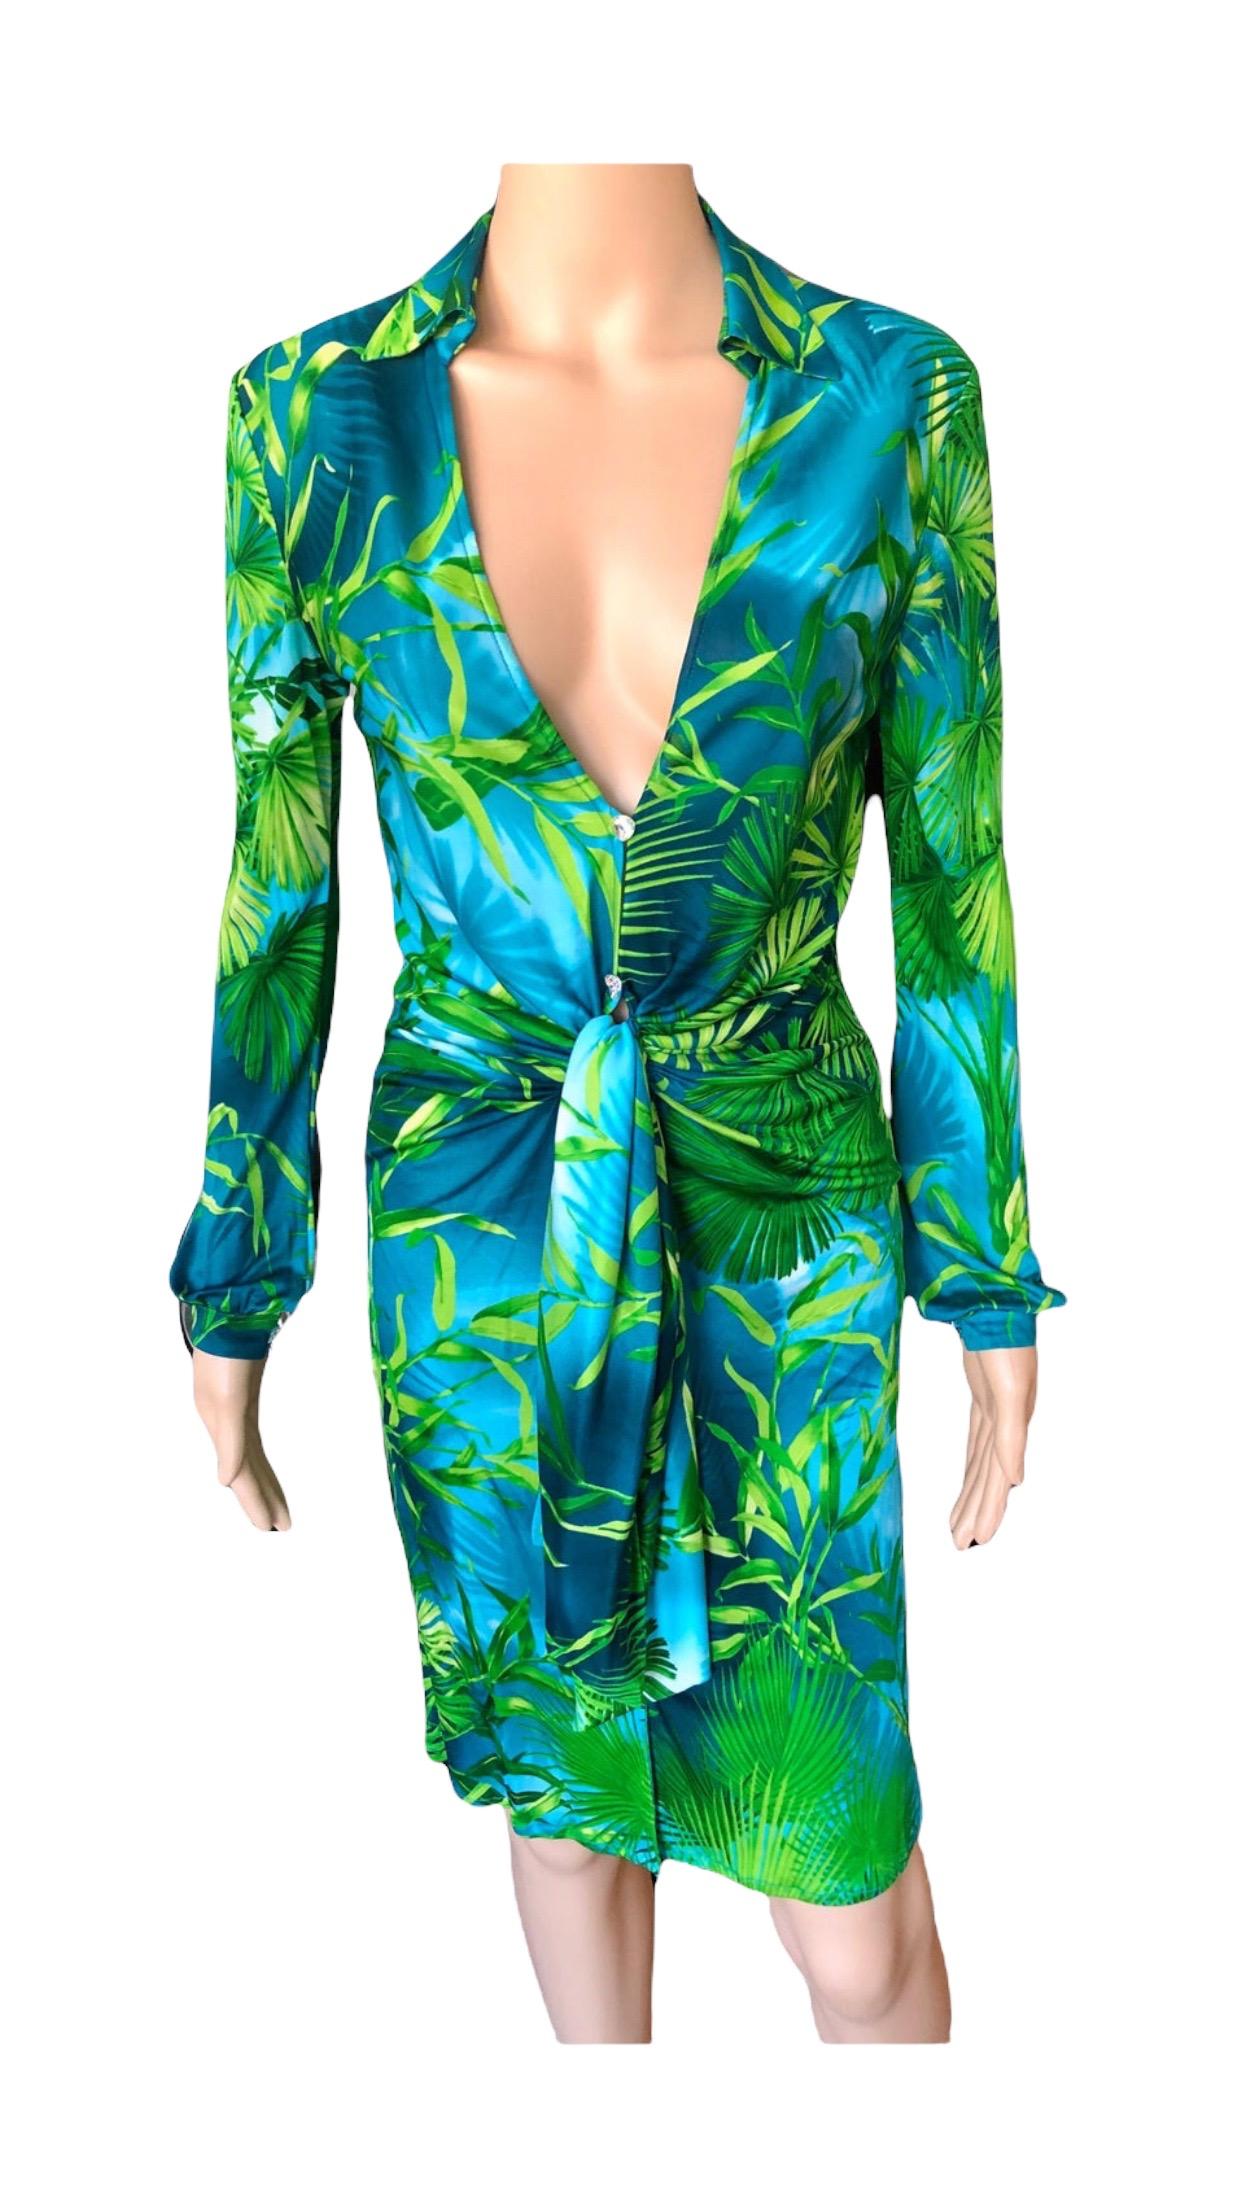 Gianni Versace Runway S/S 2000 Vintage Tropical Print Plunging Neckline Dress 3